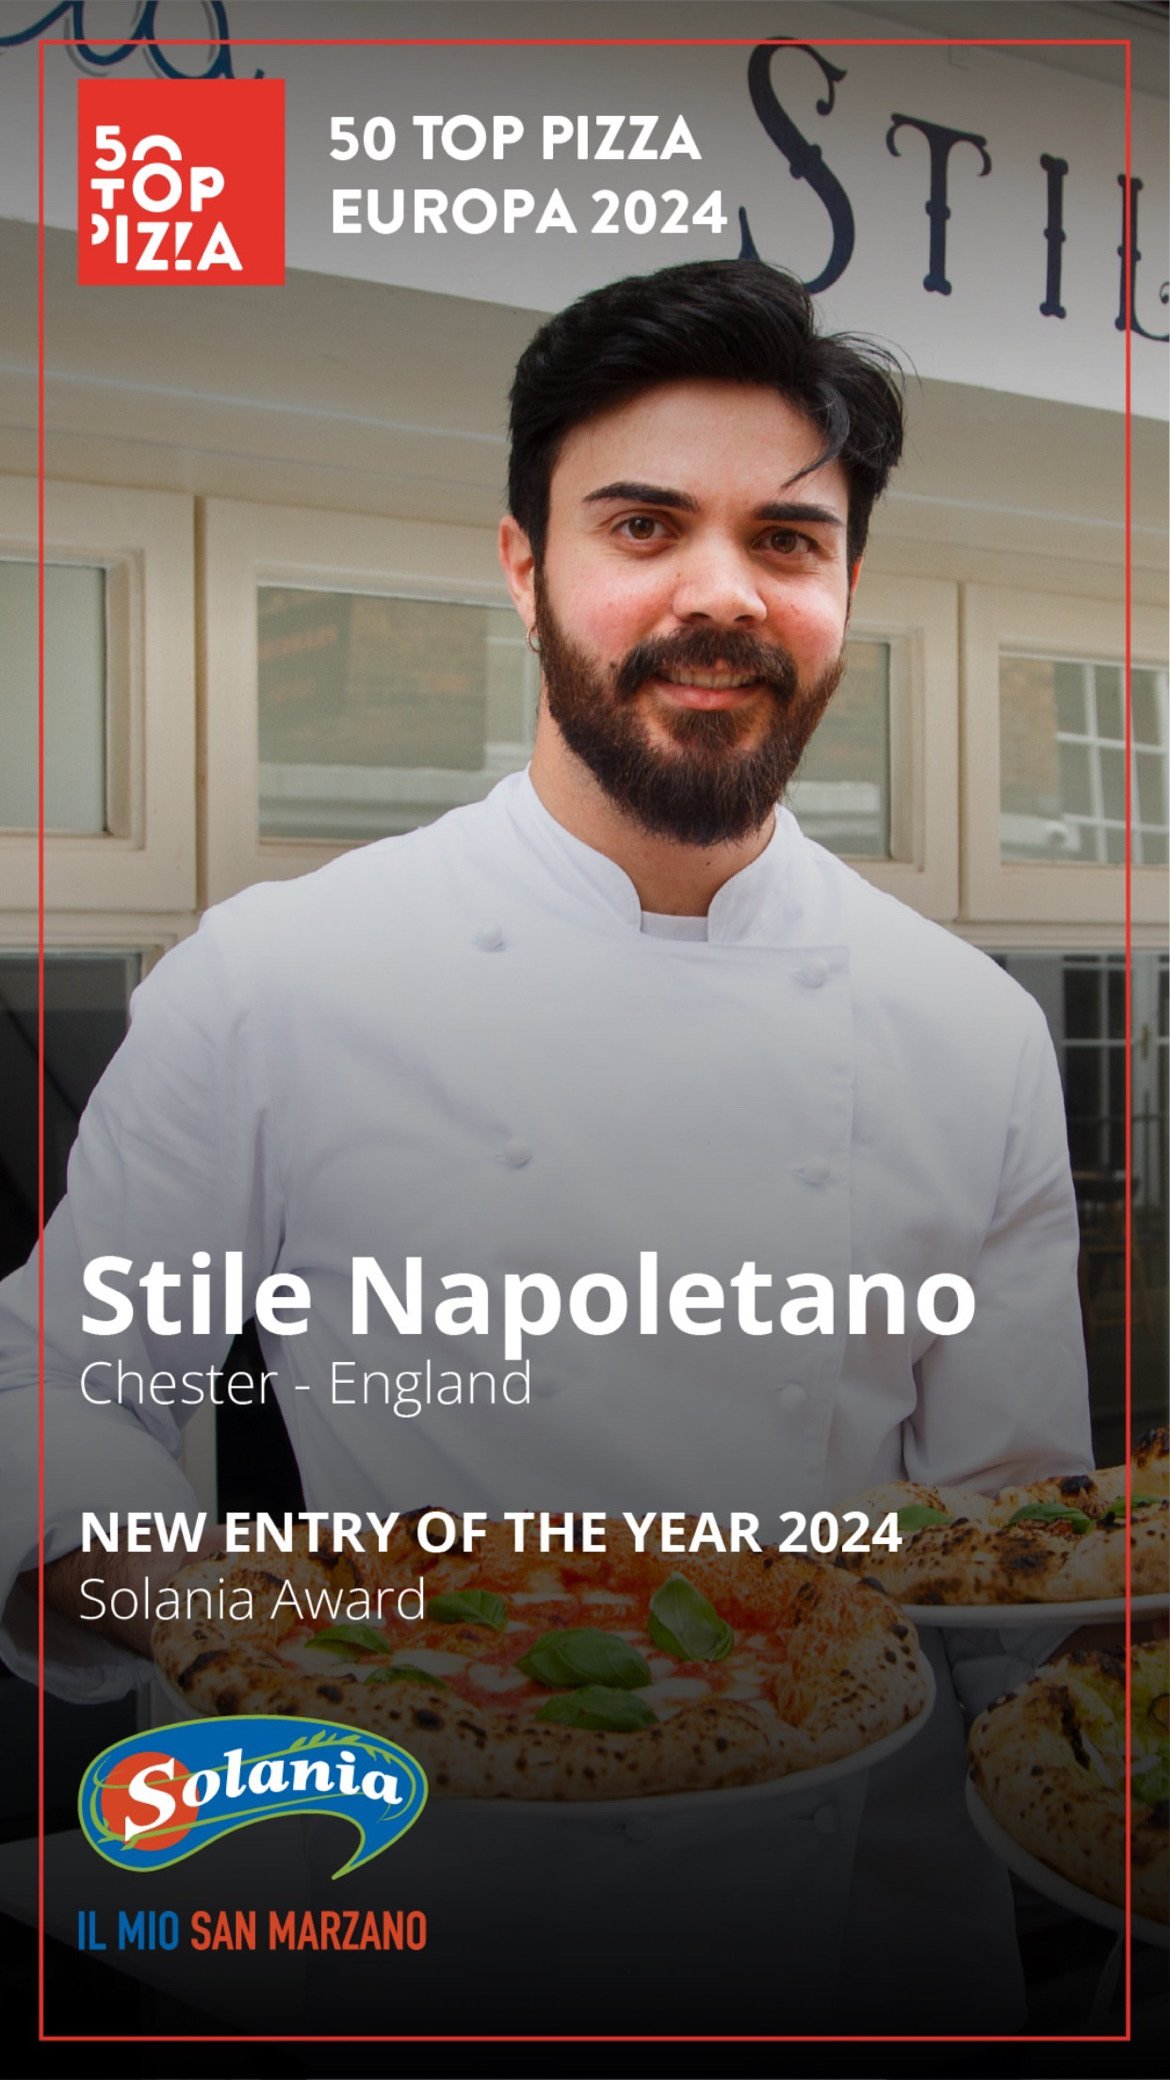 Stile Napoletano 50 Top Pizza Awards 2024